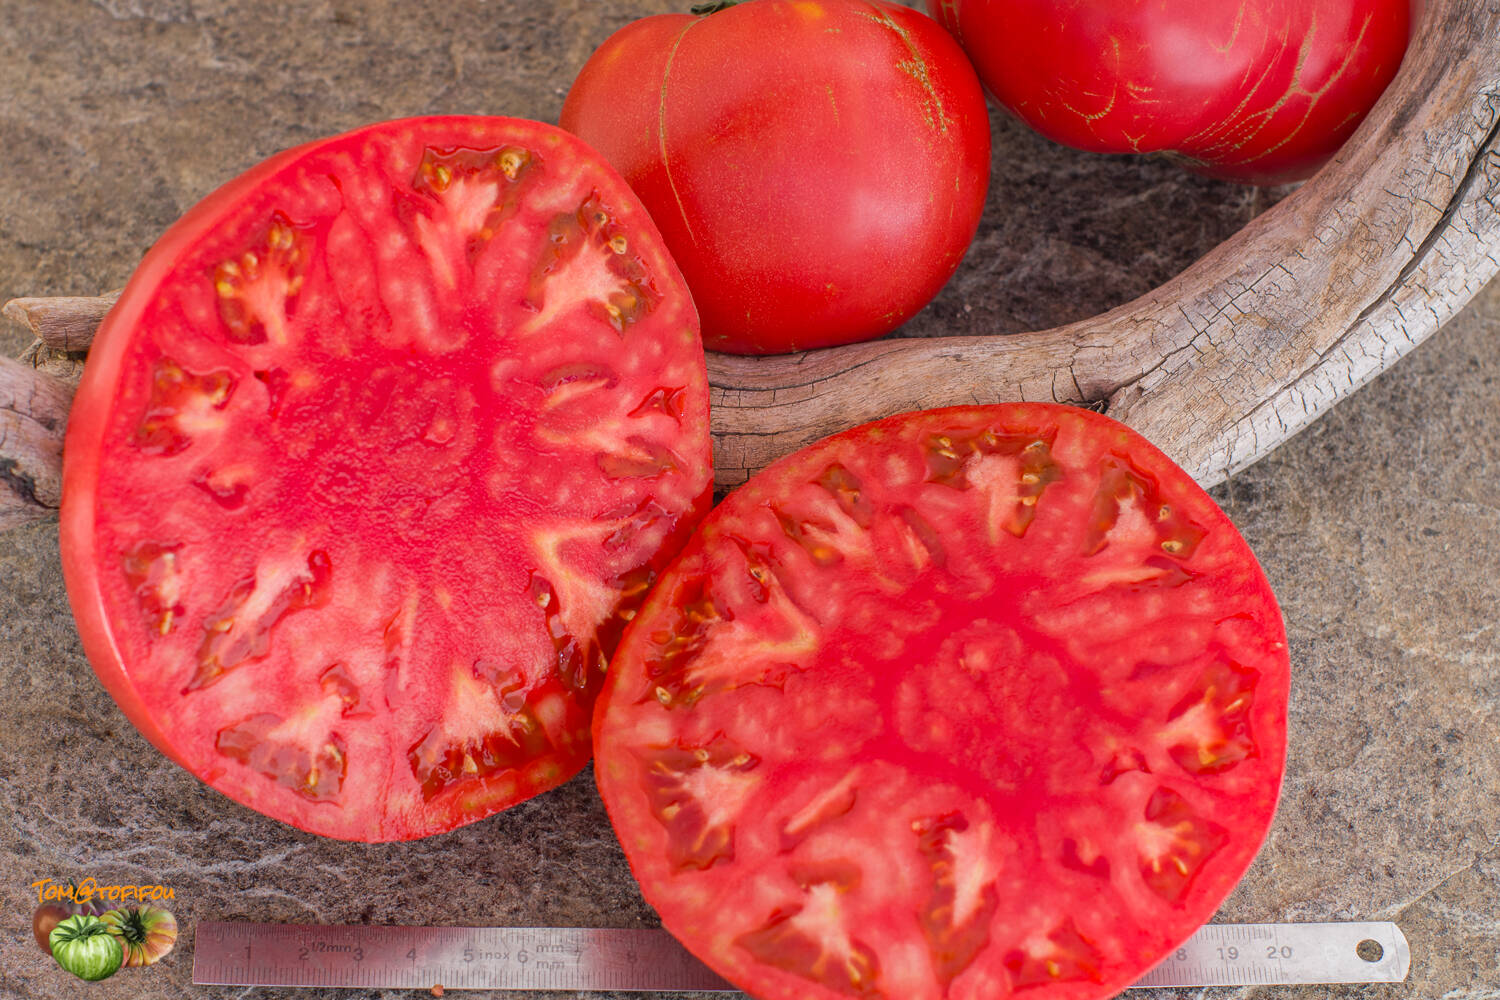 Brandywine (Sudduth's strain) Tomato – Tomato Growers Supply Company